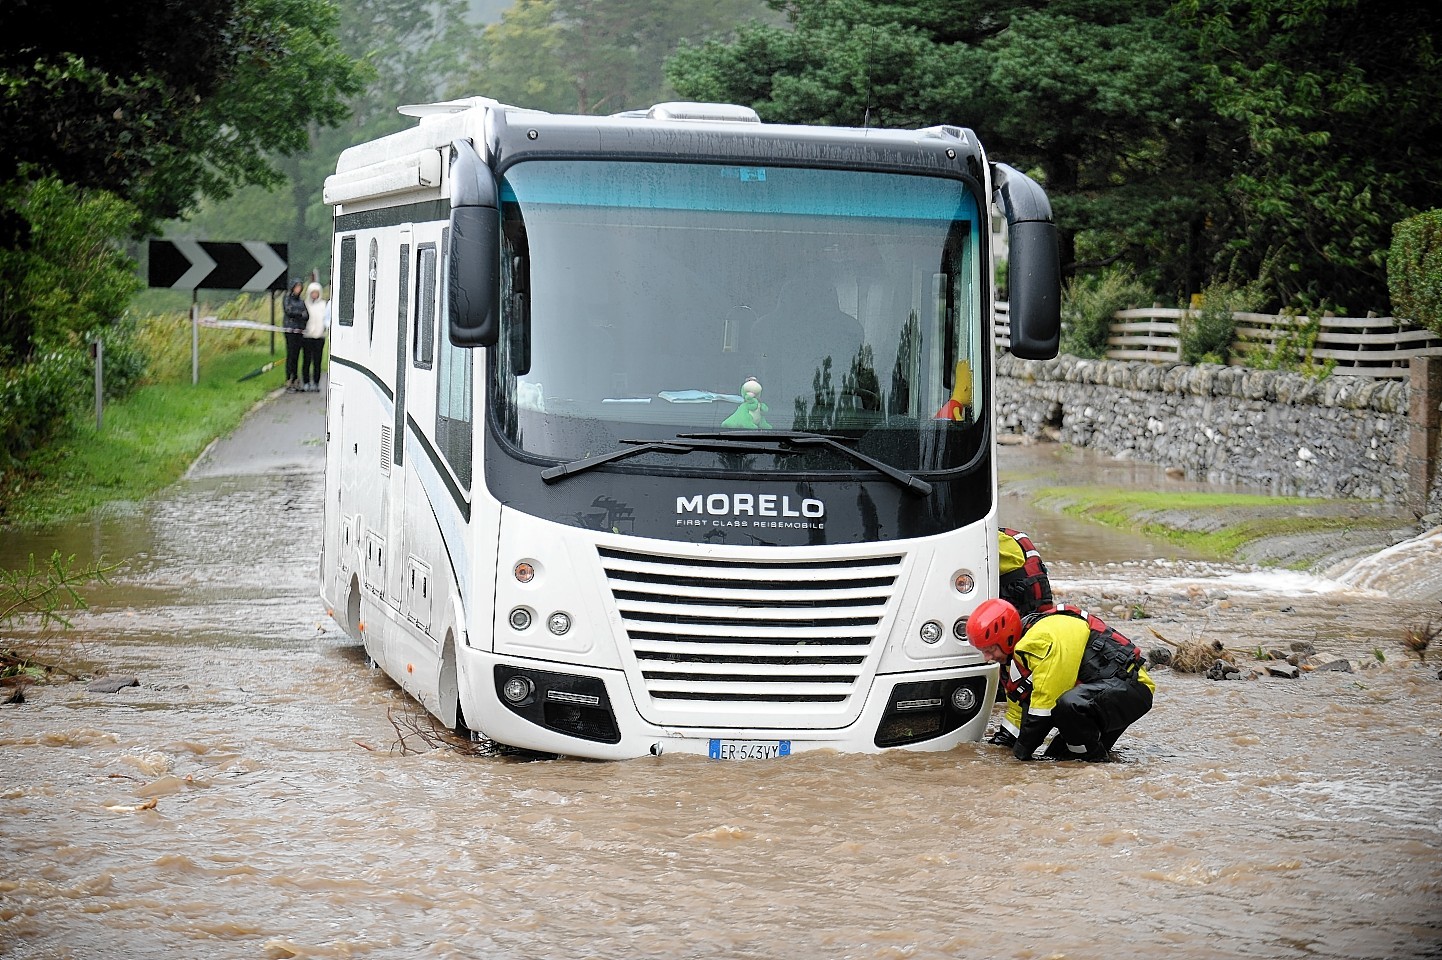 A bus battles through flooding near Ullapool